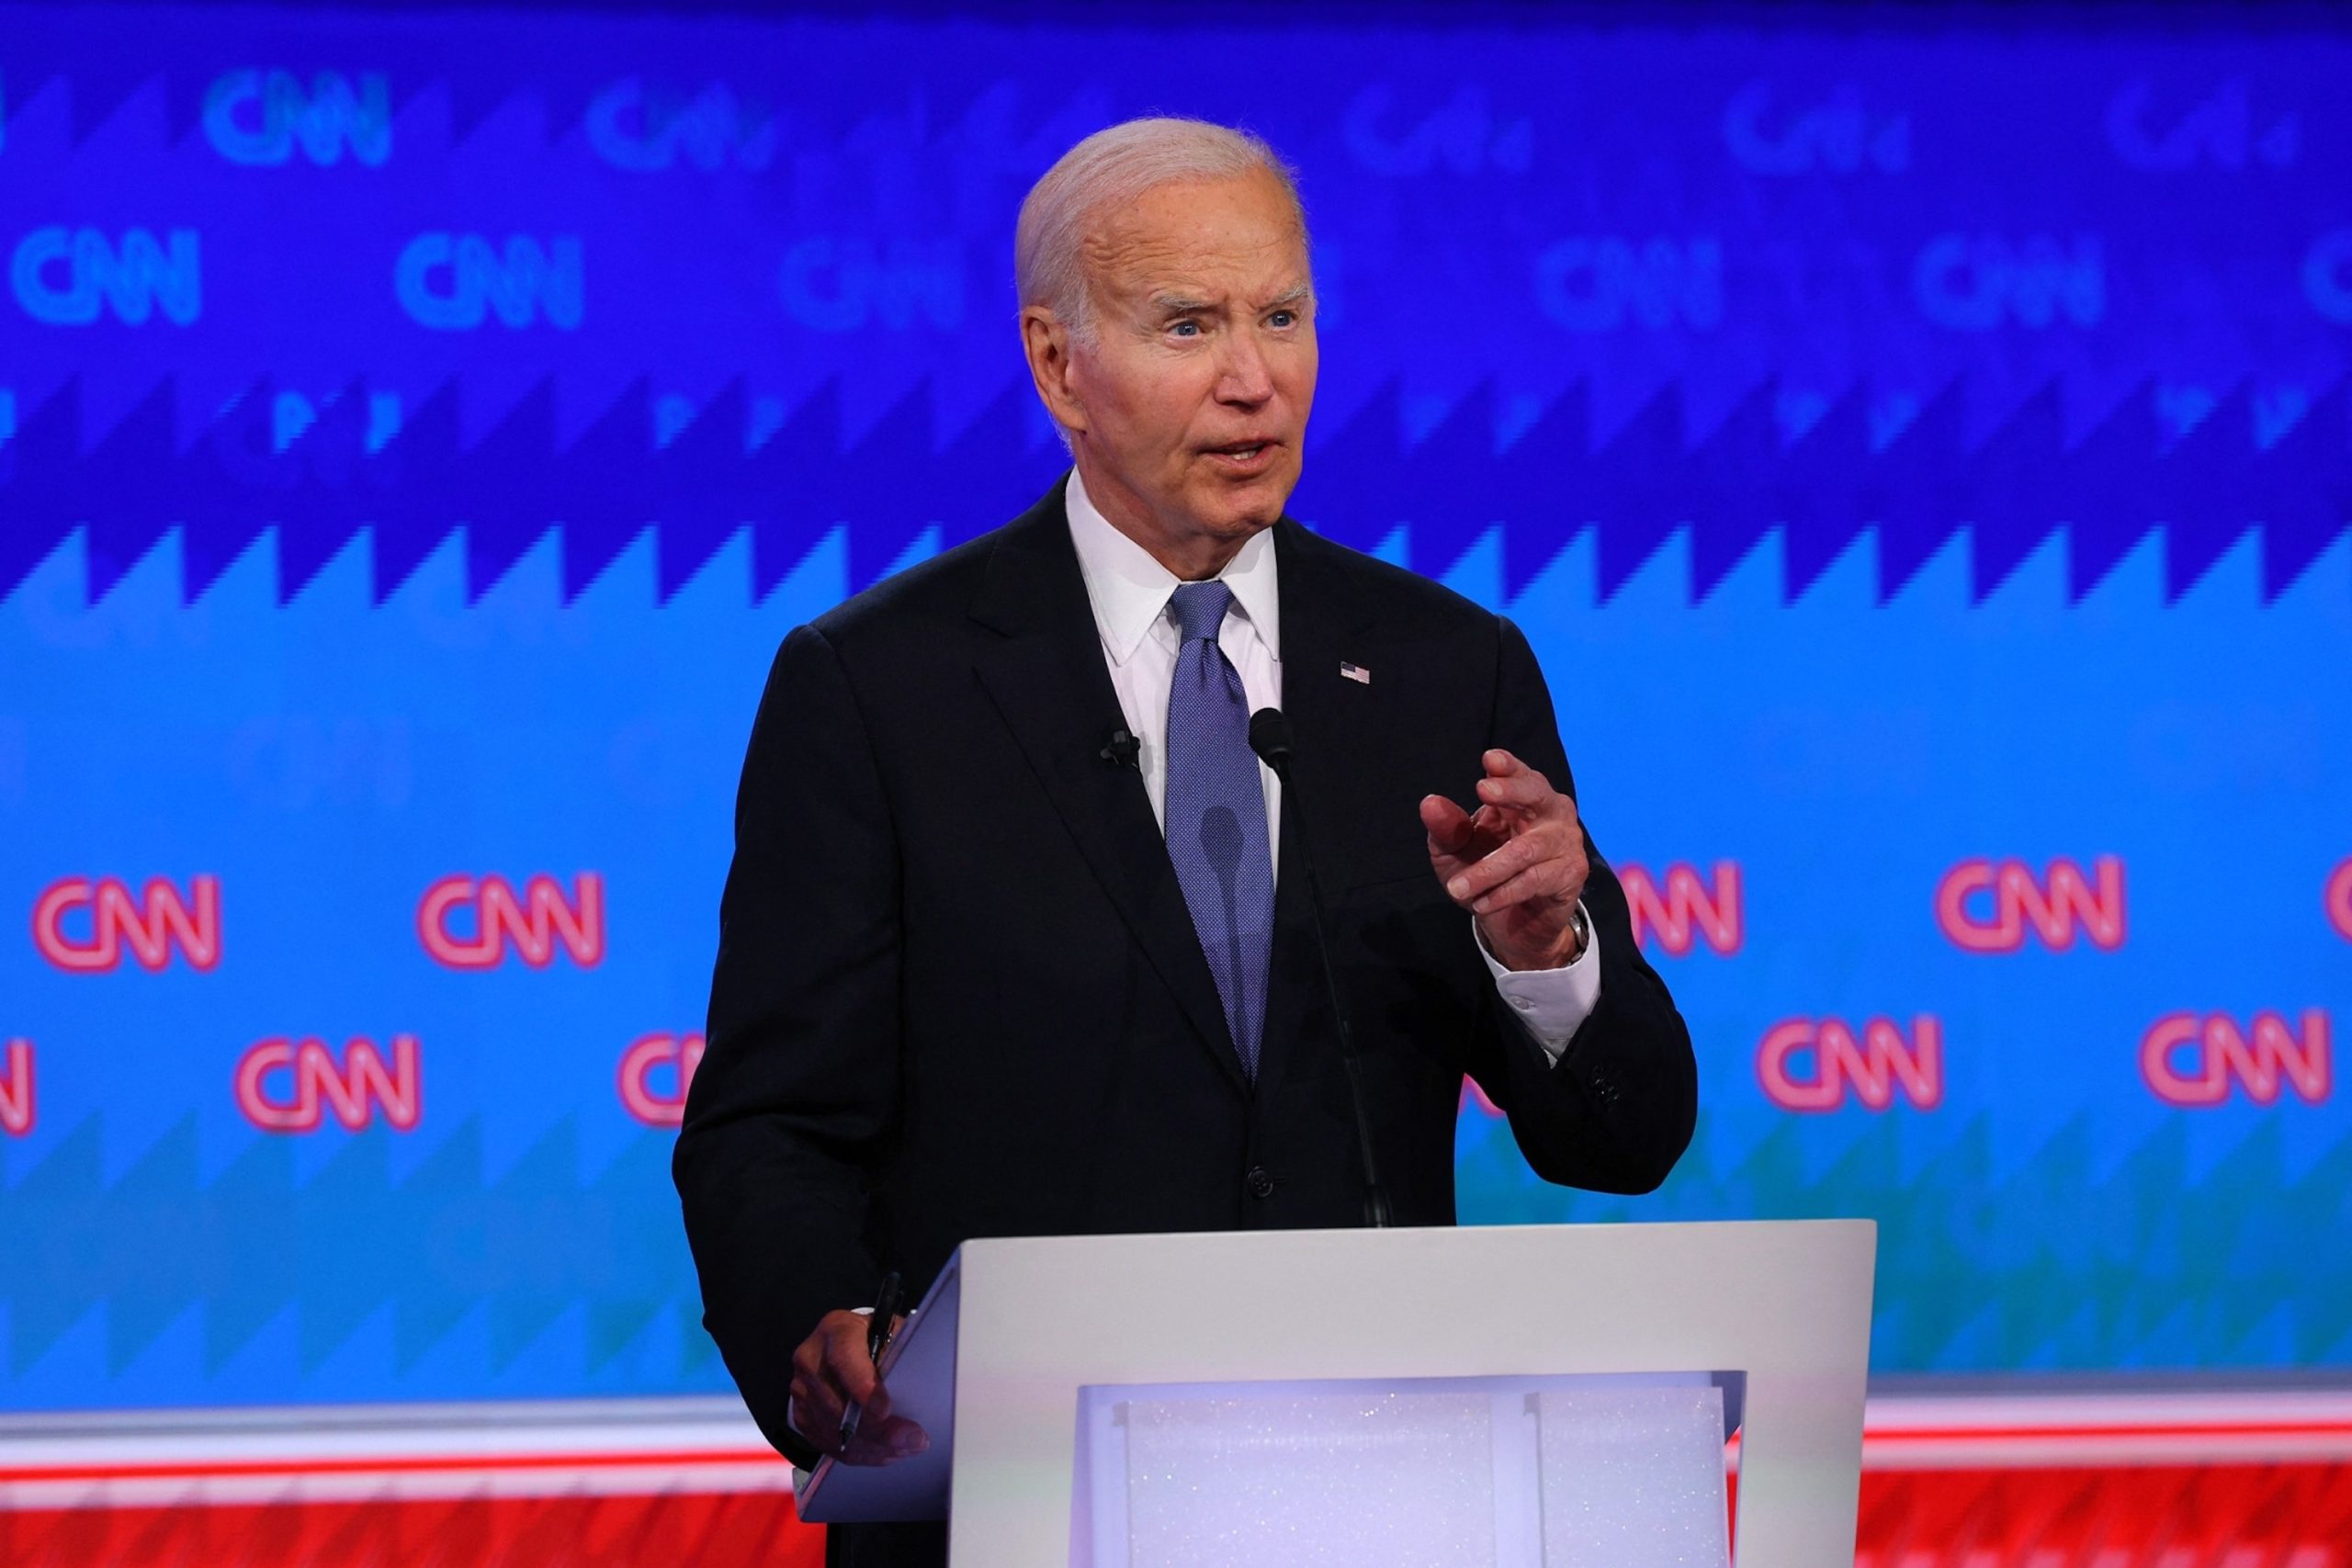 Analysis: Growing Concern Among Democrats Following Biden's Debate Performance - What Comes Next?